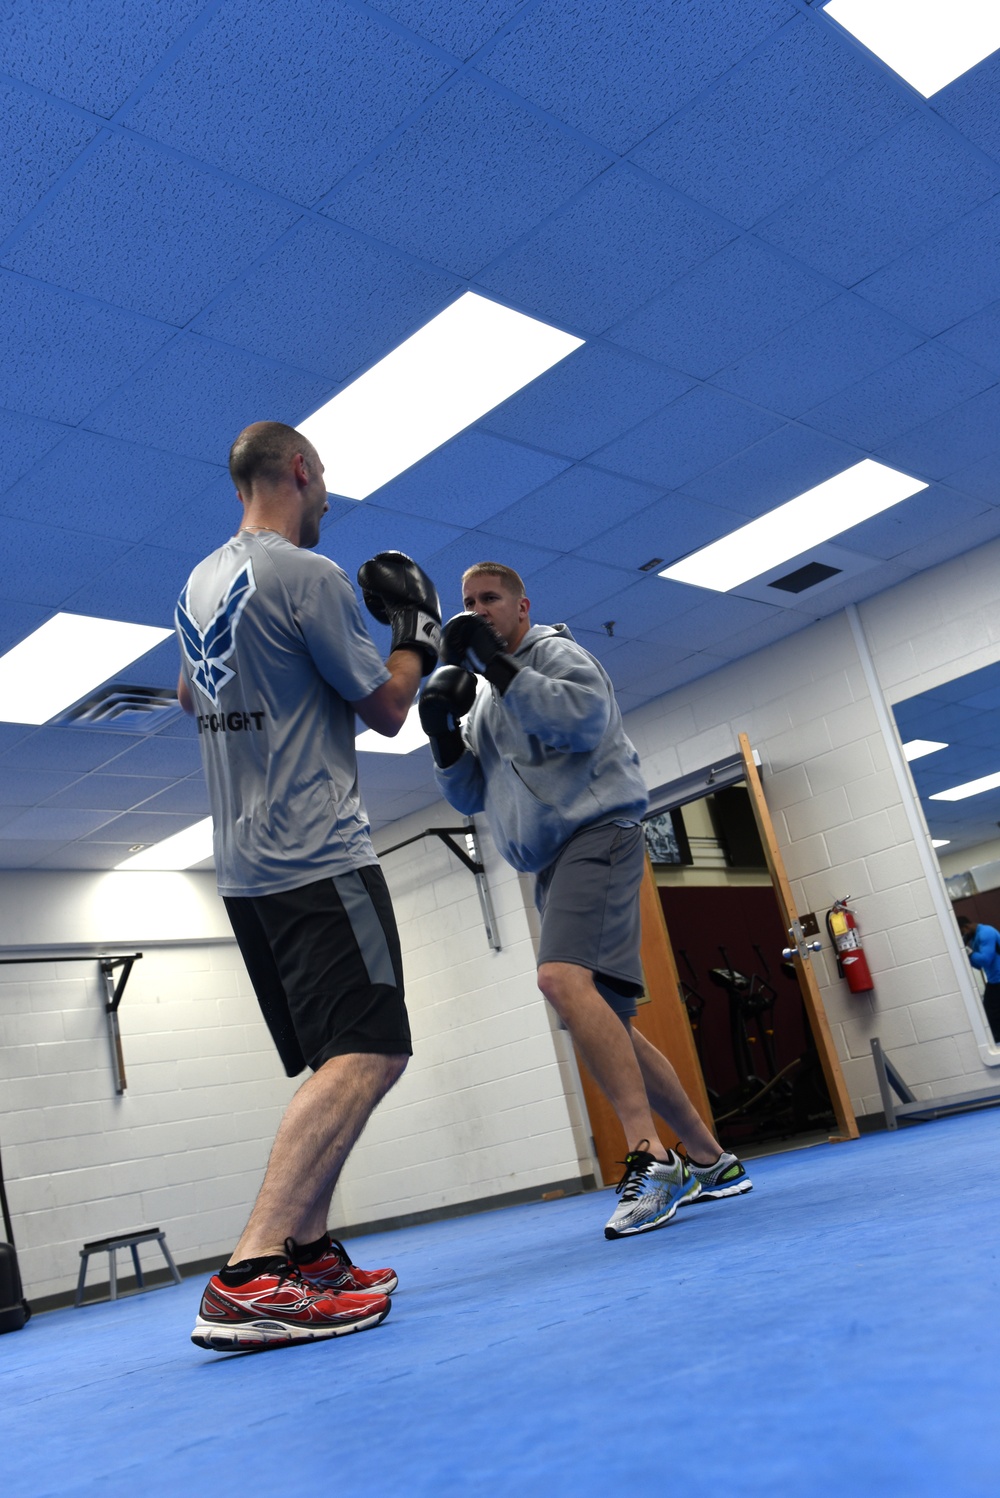 Fighting instructors